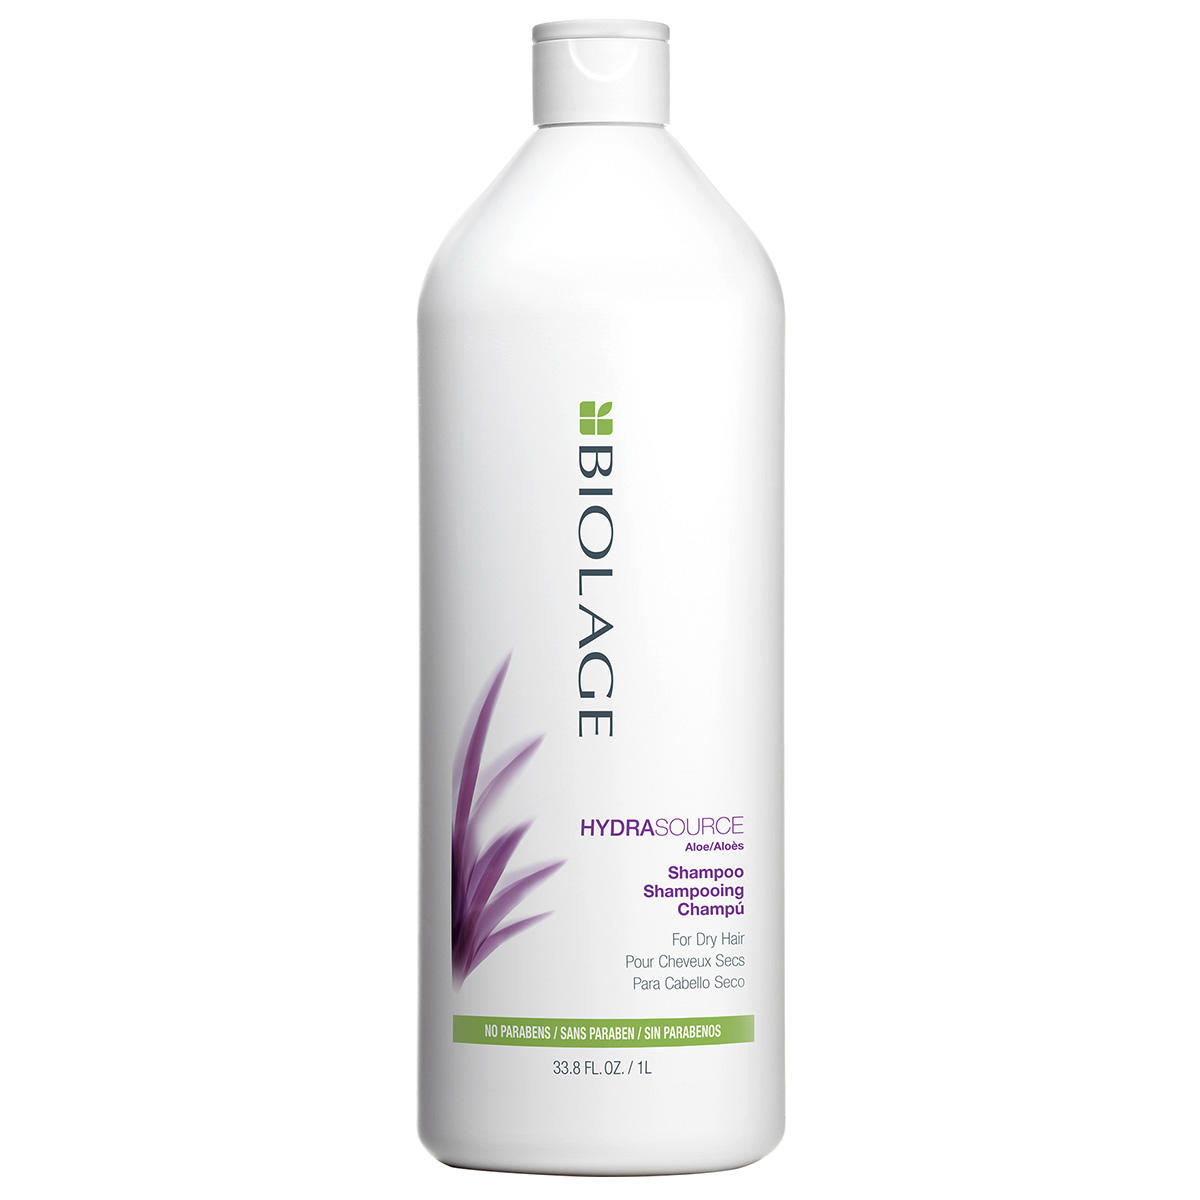 BIOLAGE HYDRA SOURCE Shampoo 1 Liter - 1